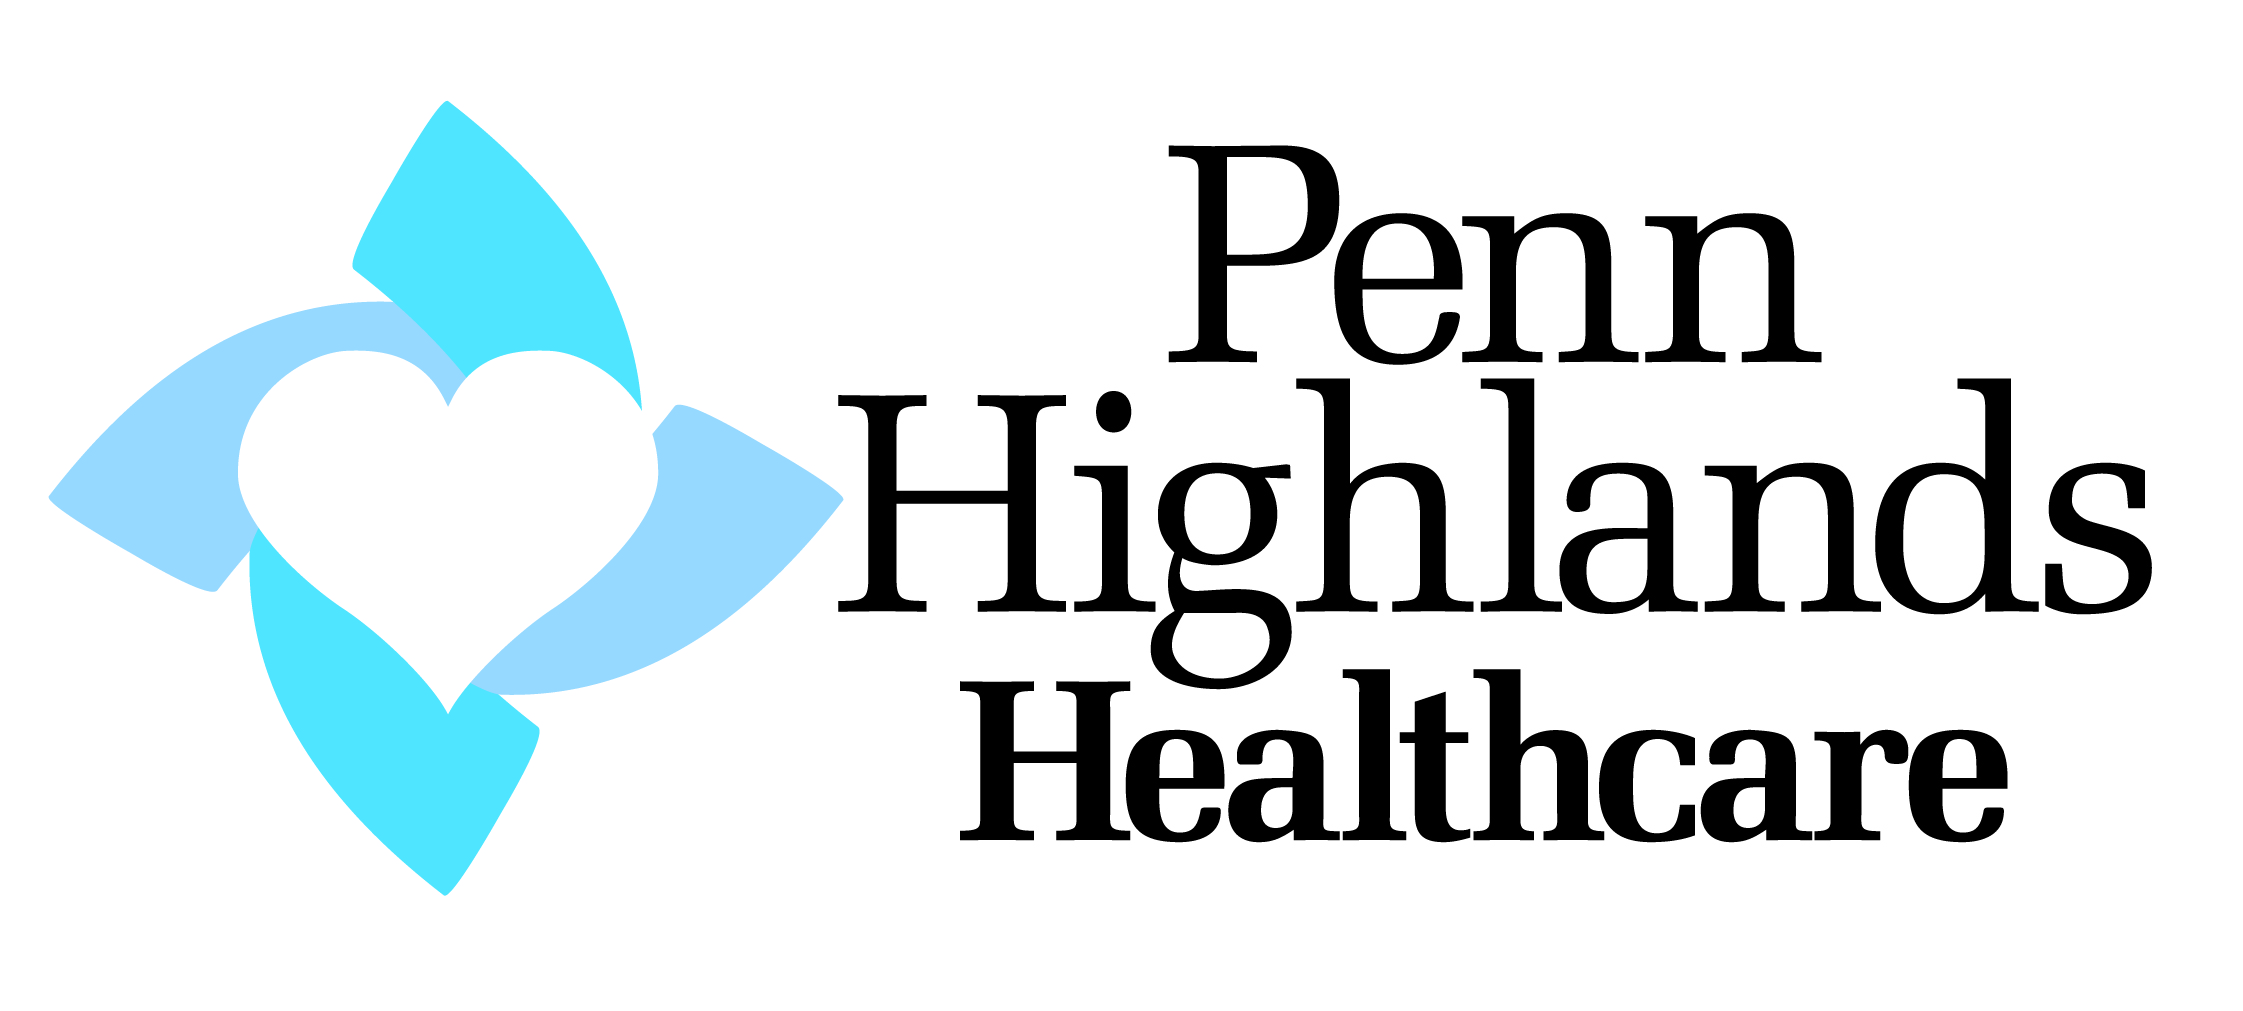 Penn Highlands Healt